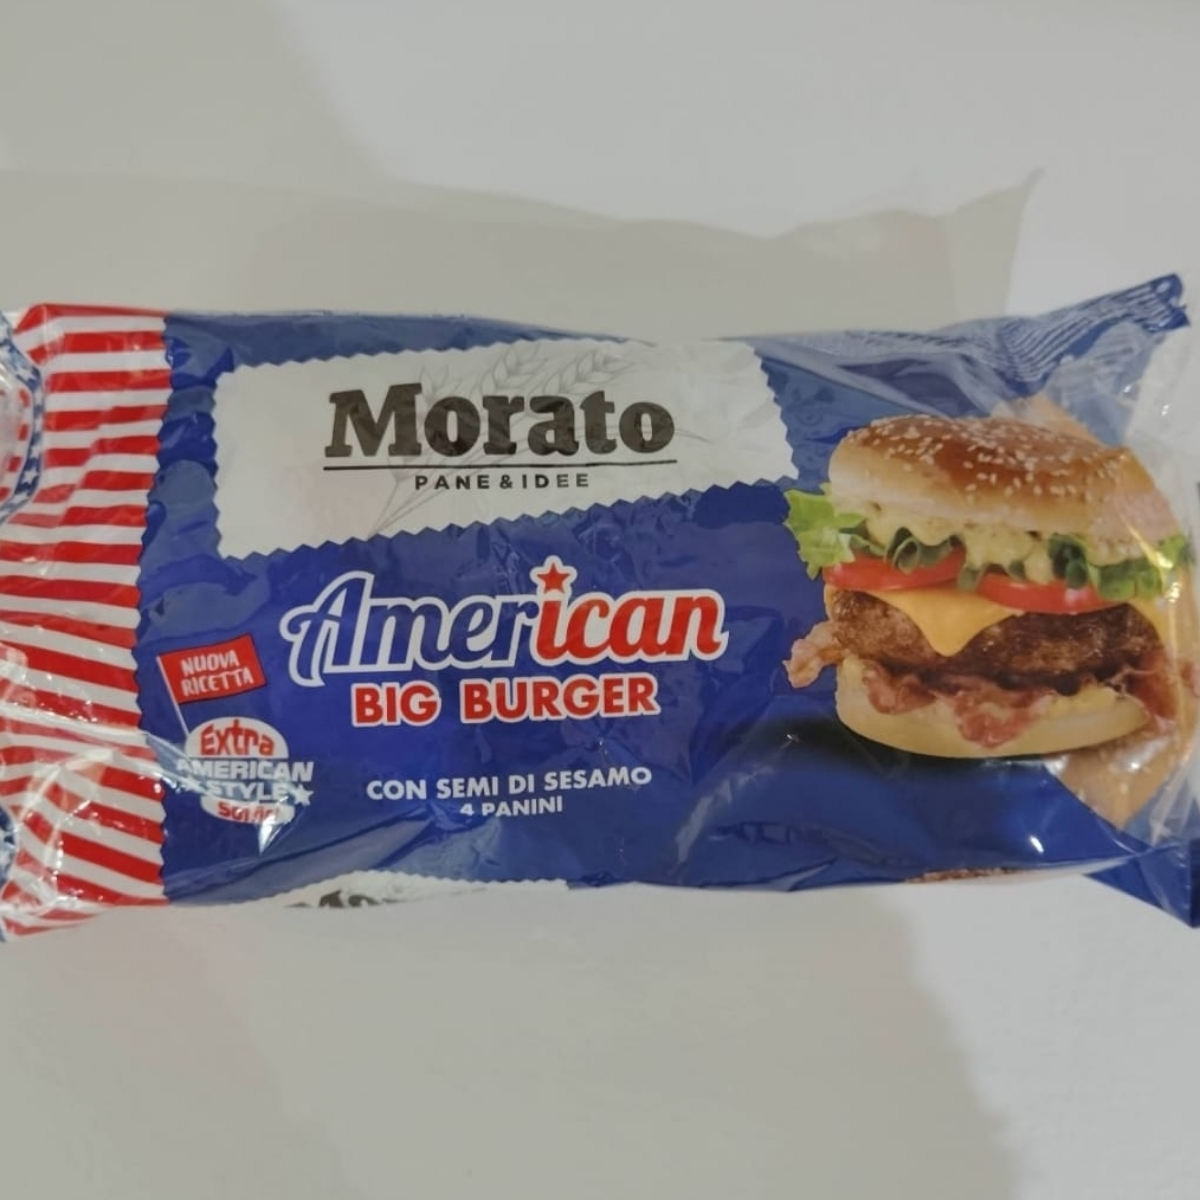 Morato American Big Burger Reviews